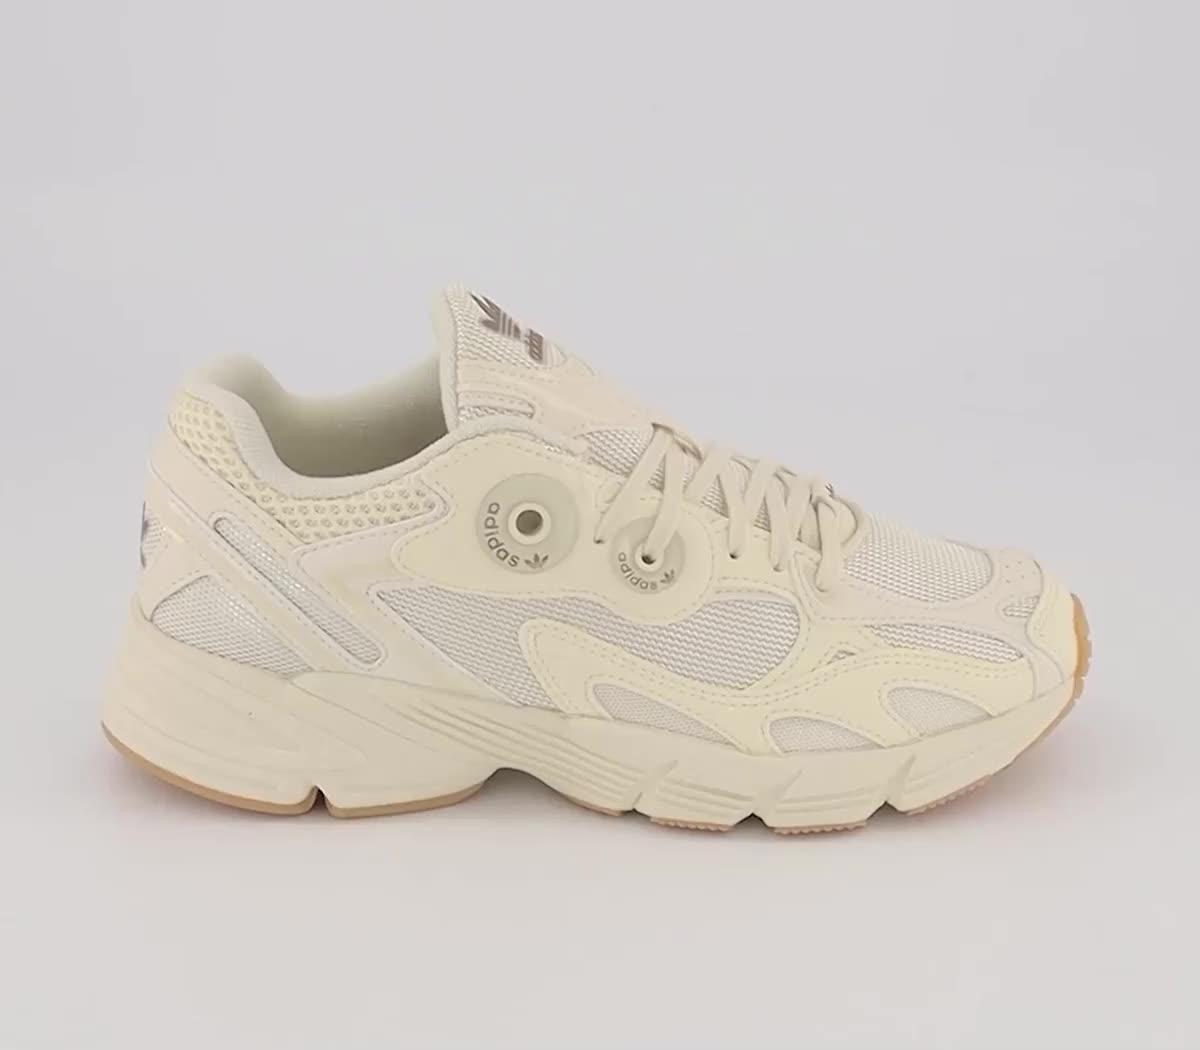 adidas Originals Astir trainers in off white with gum sole